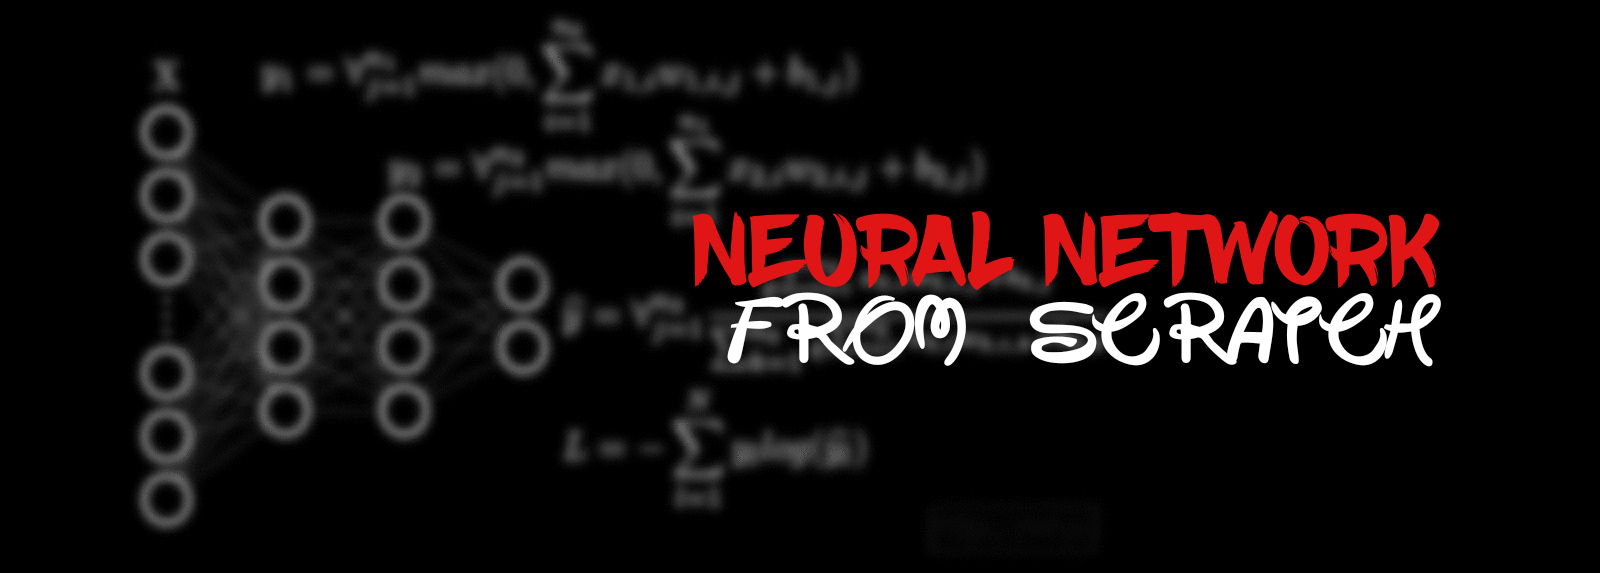 Neural Network from scratch - Part II